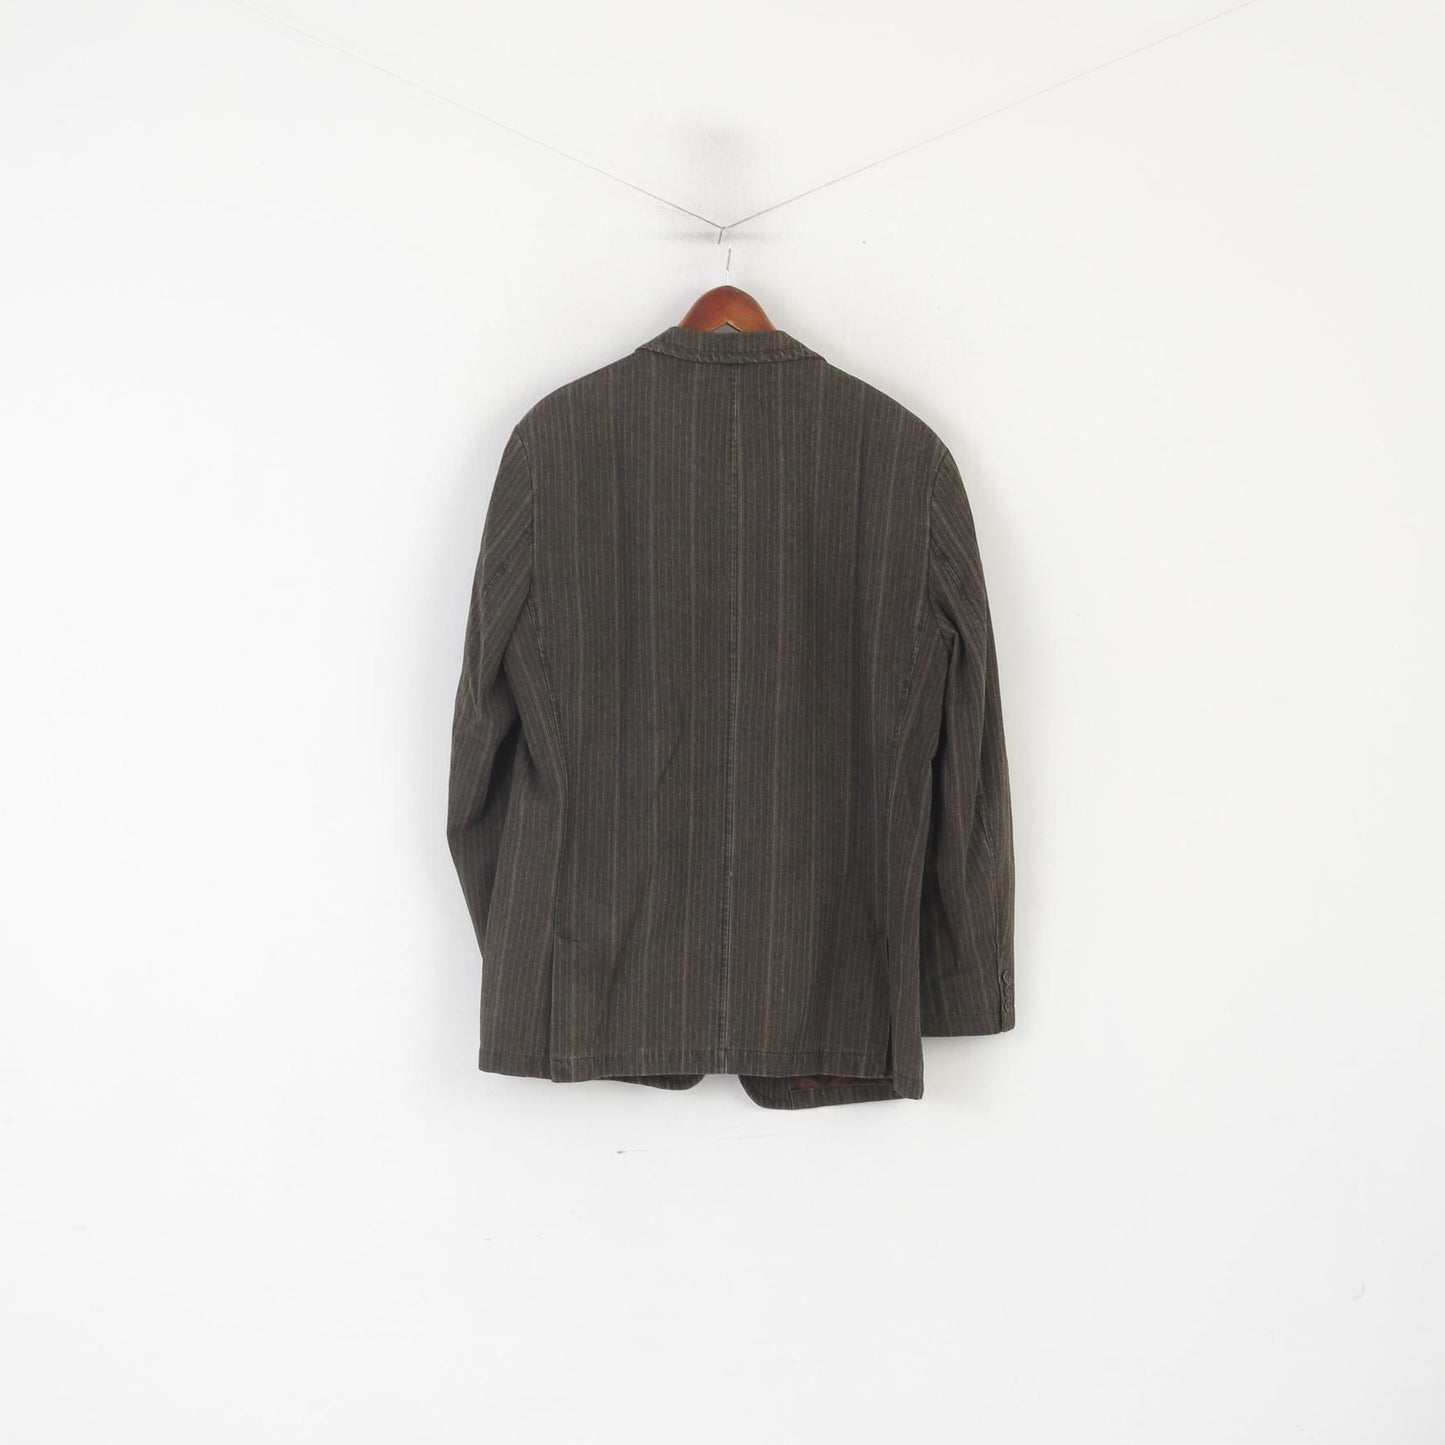 Stones Men XL Blazer Brown Cotton Denim Striped Vintage Single Breasted Jacket